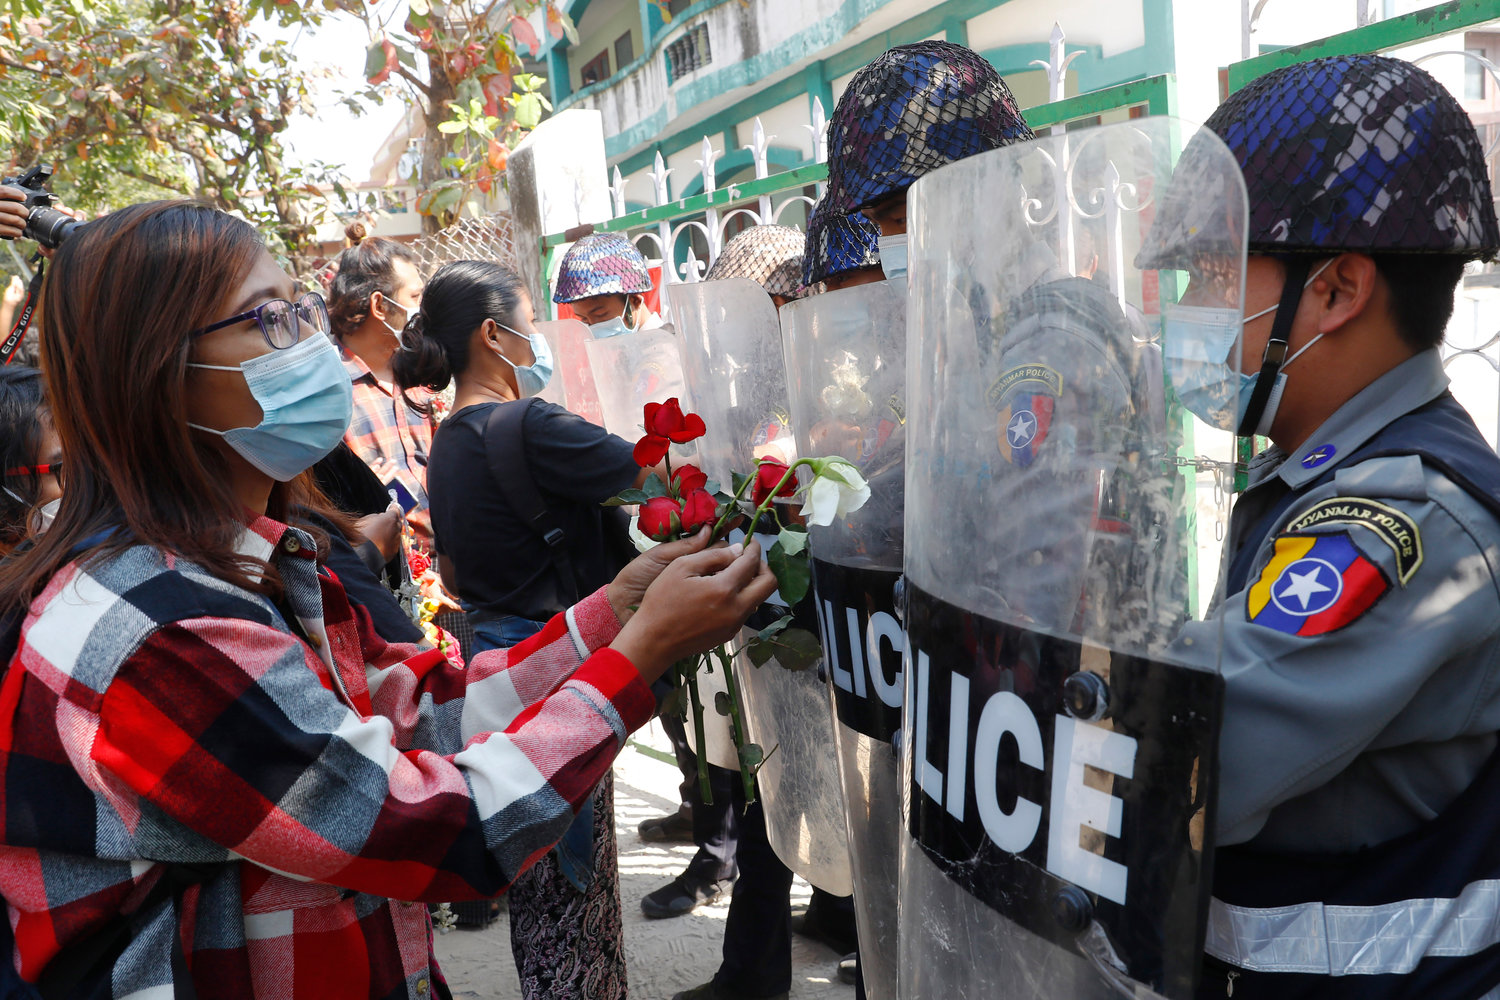 Us Burma Act Uplifts The Resistance Movement In Myanmar